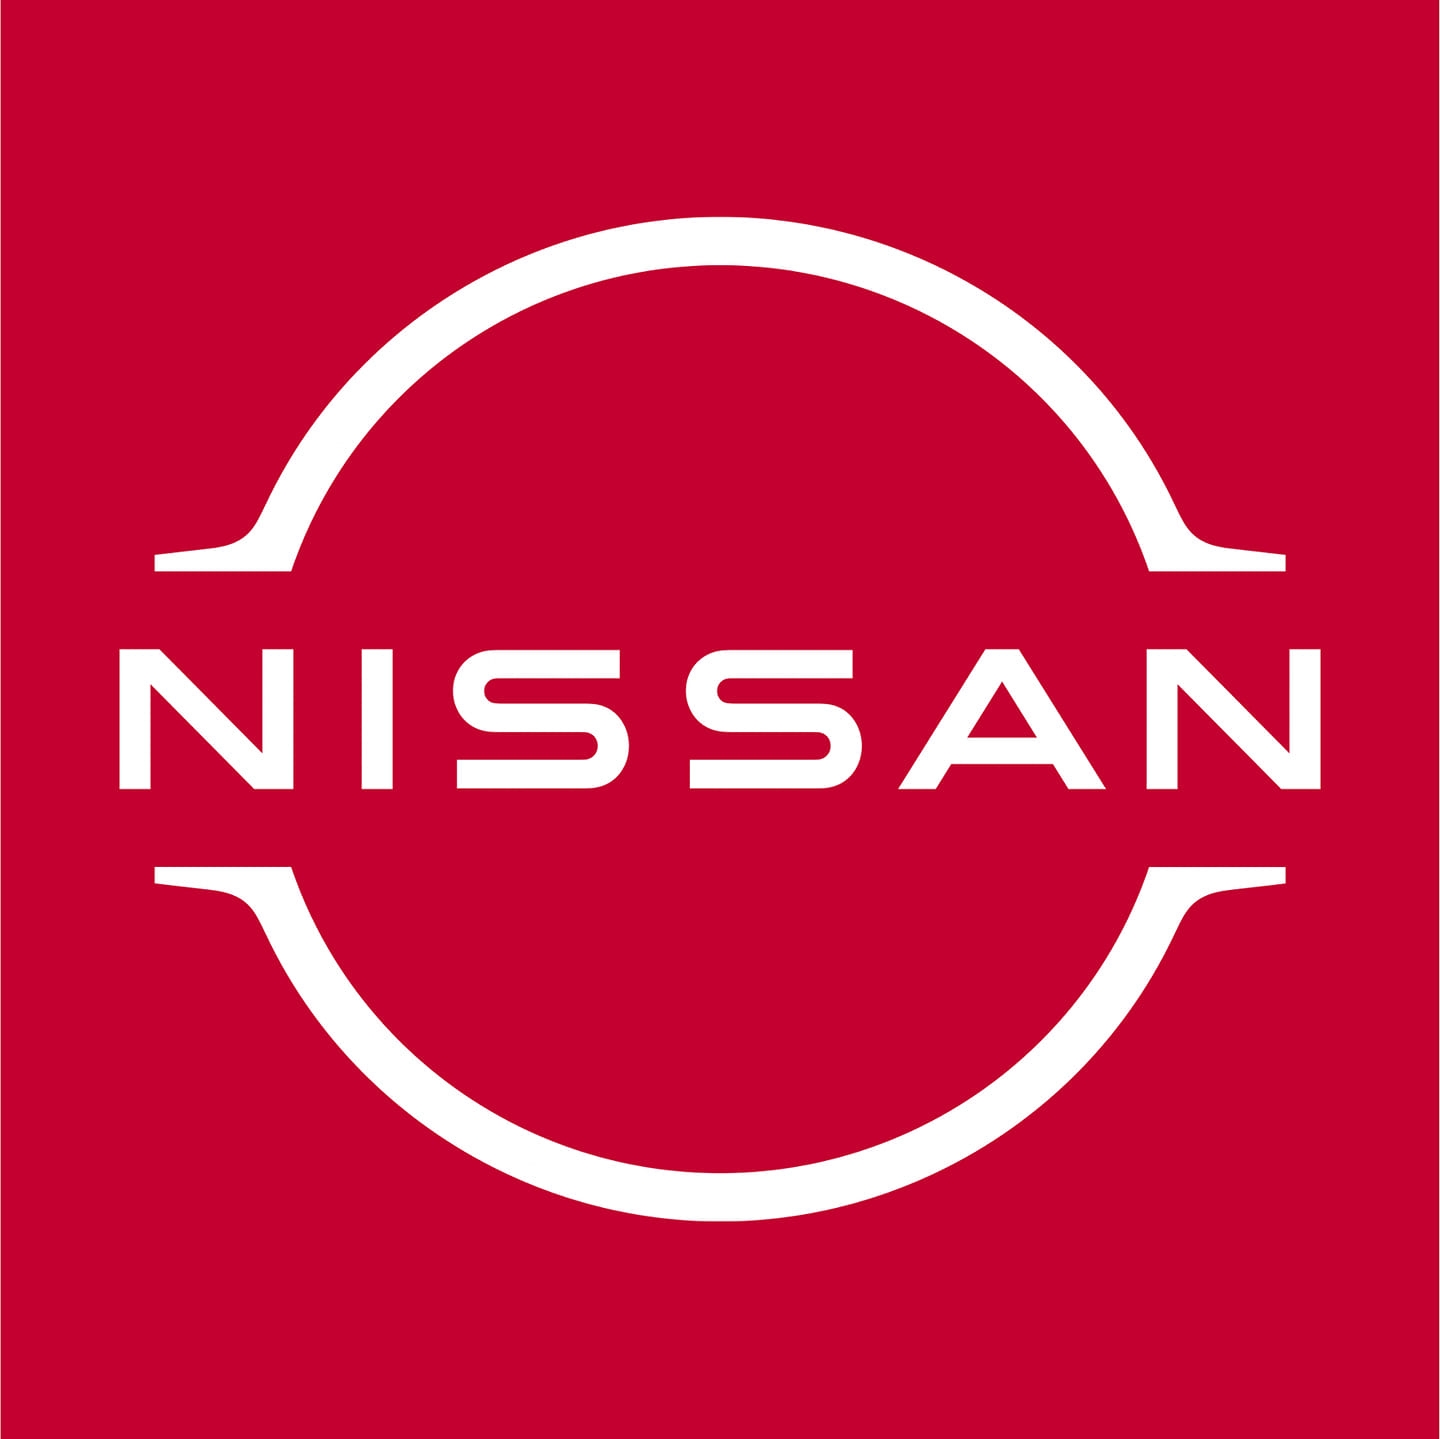 ILAND NISSAN IMPHAL - Logo